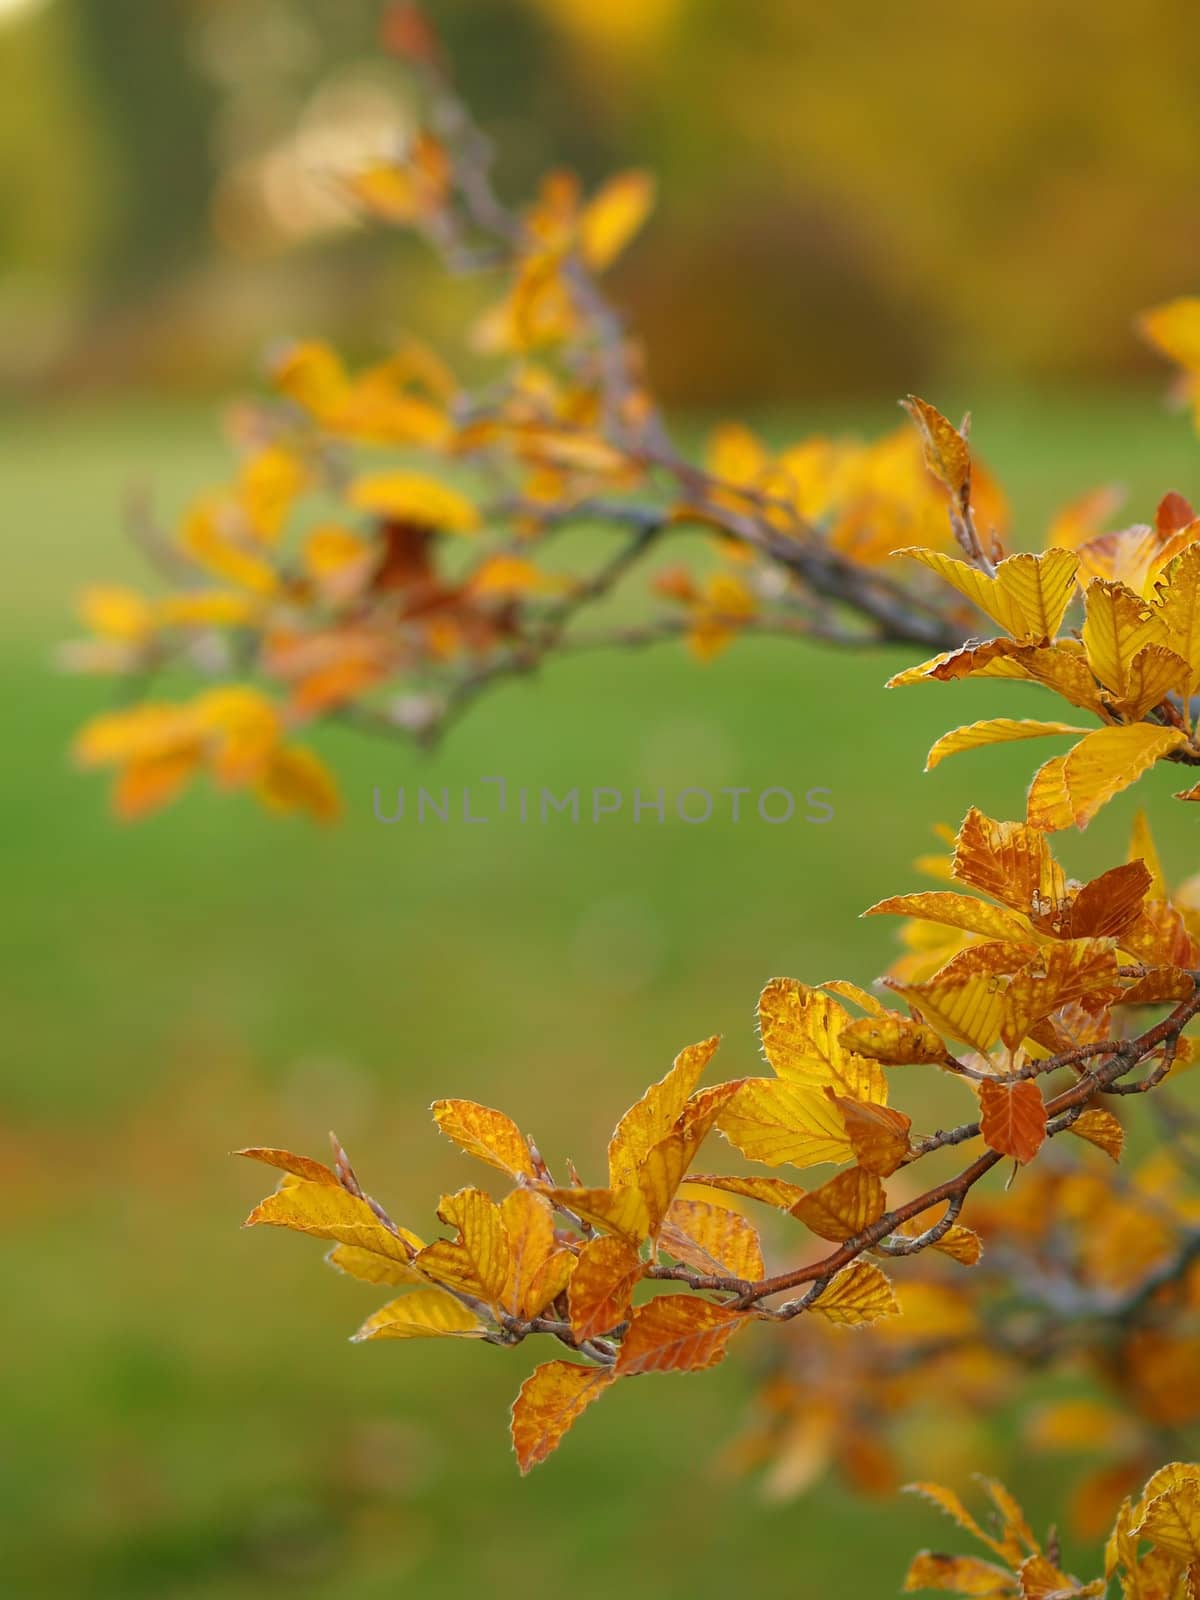 Autumn Leaves by Frankljunior